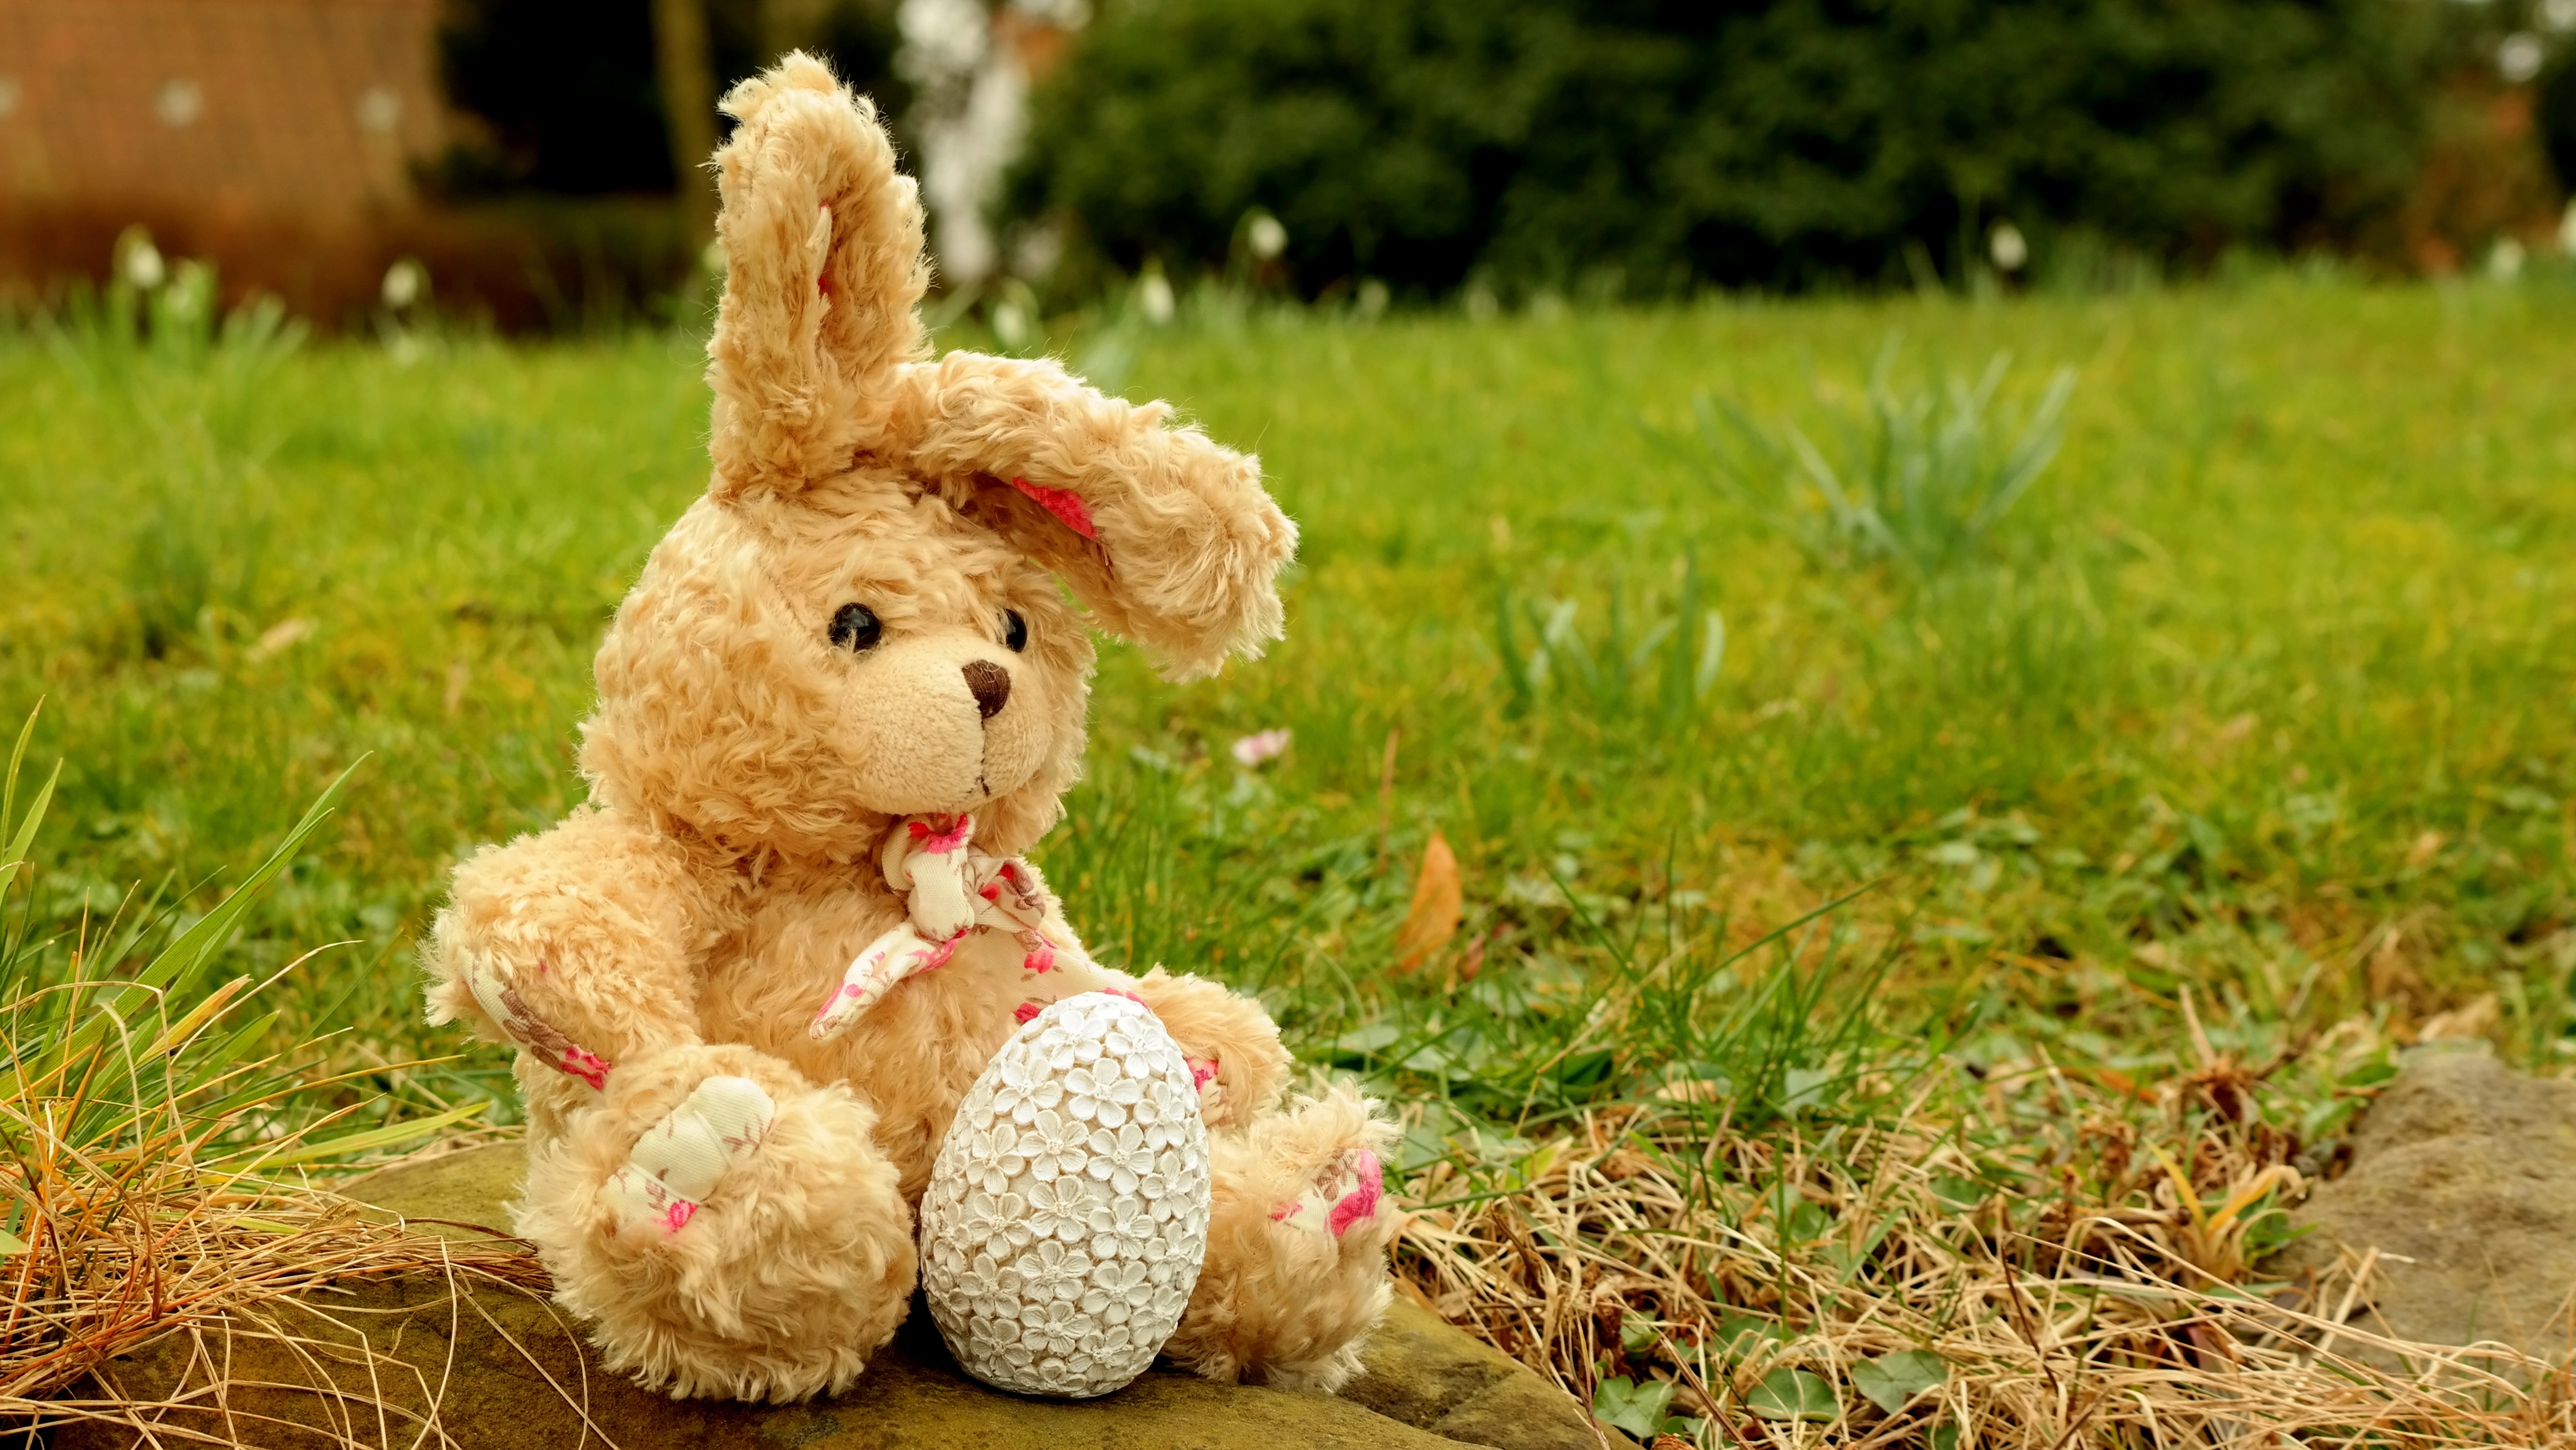 Hare, Stuffed Animal, Soft Toy, Fabric, teddy bear, stuffed toy